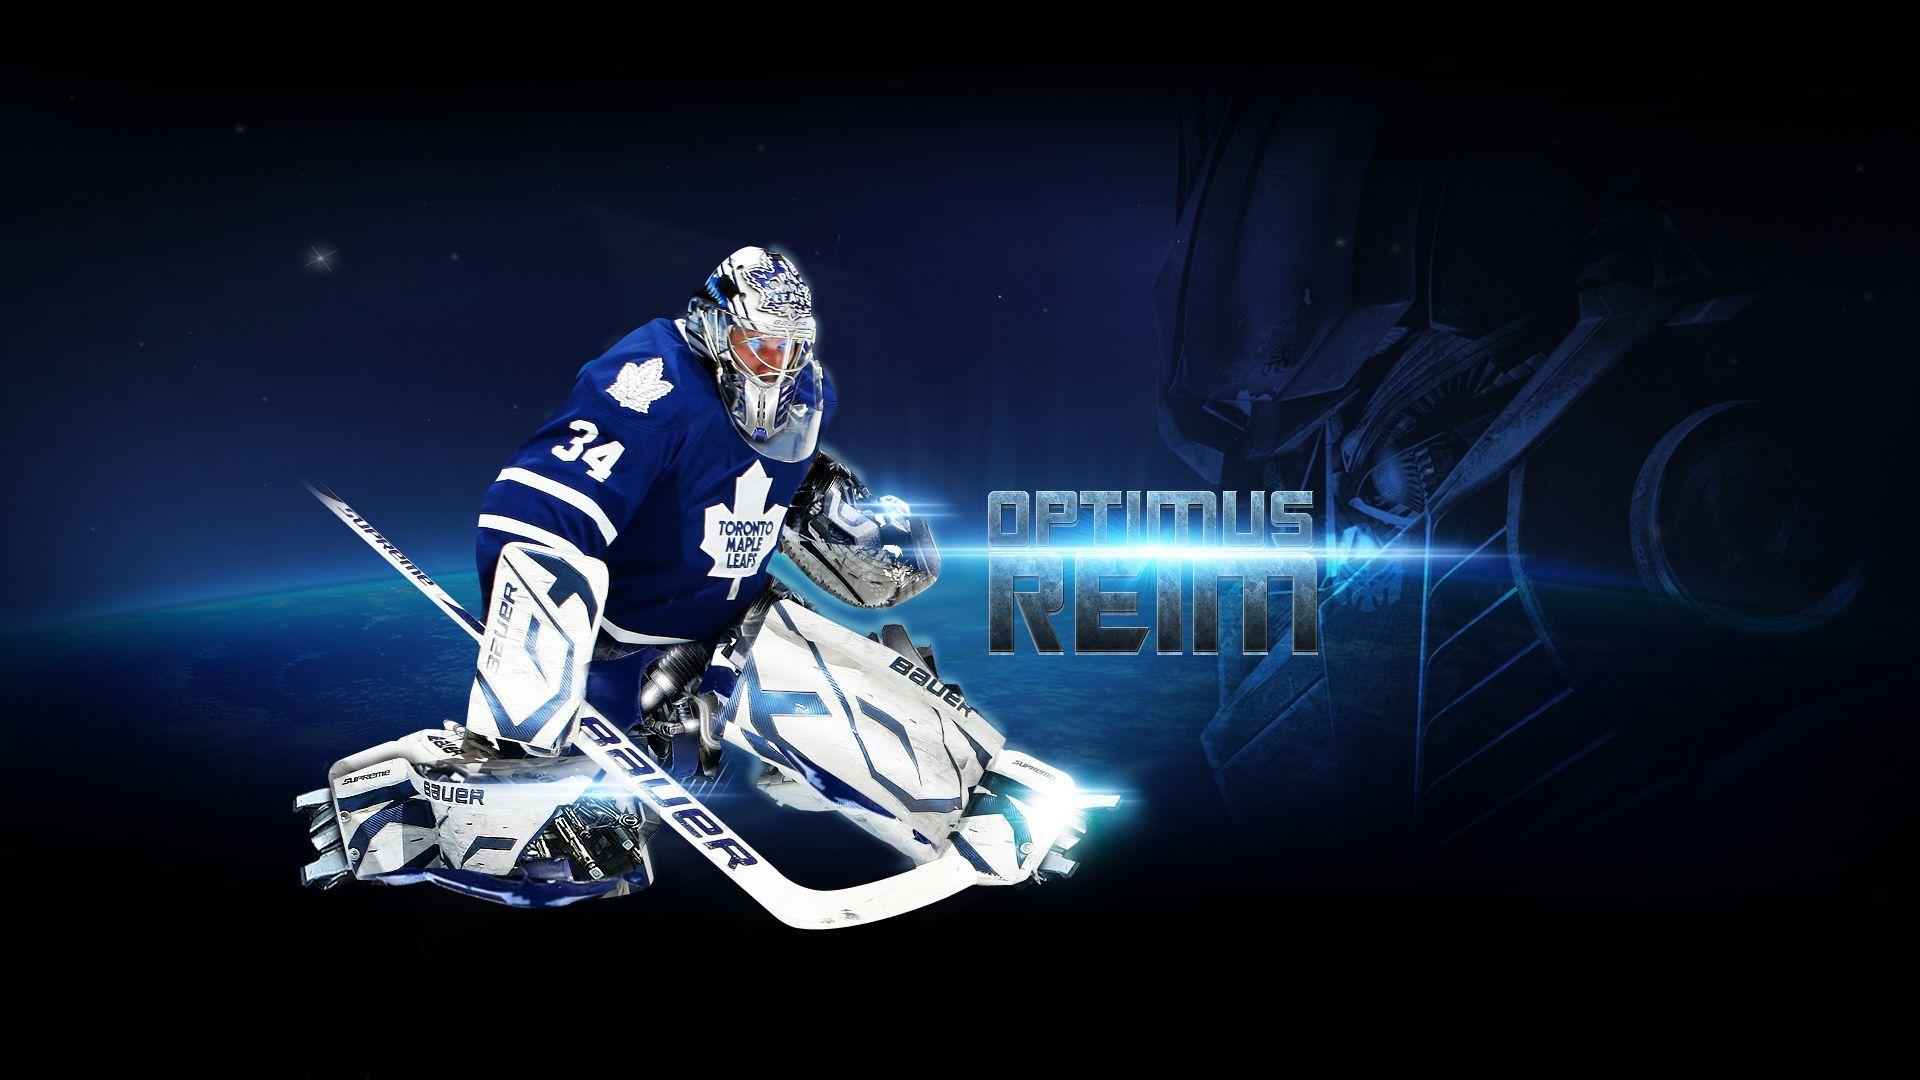 NHL Toronto Maple Leafs Optimus Reim wallpaper HD 2016 in Hockey